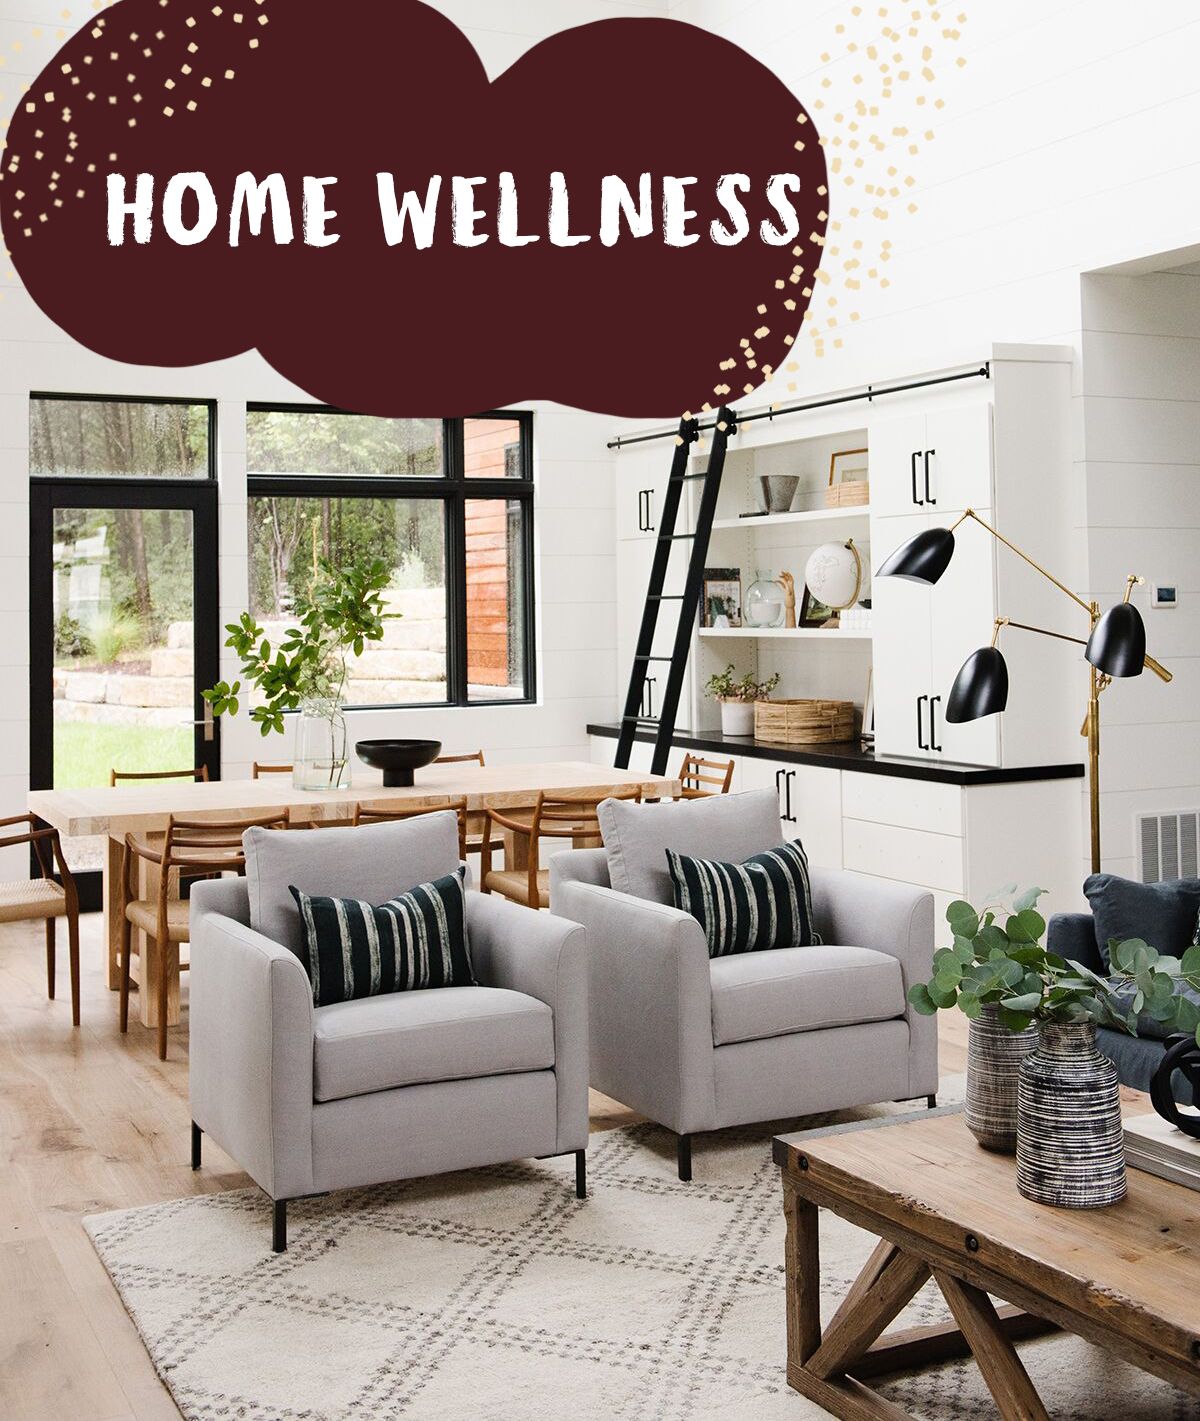 Home Wellness